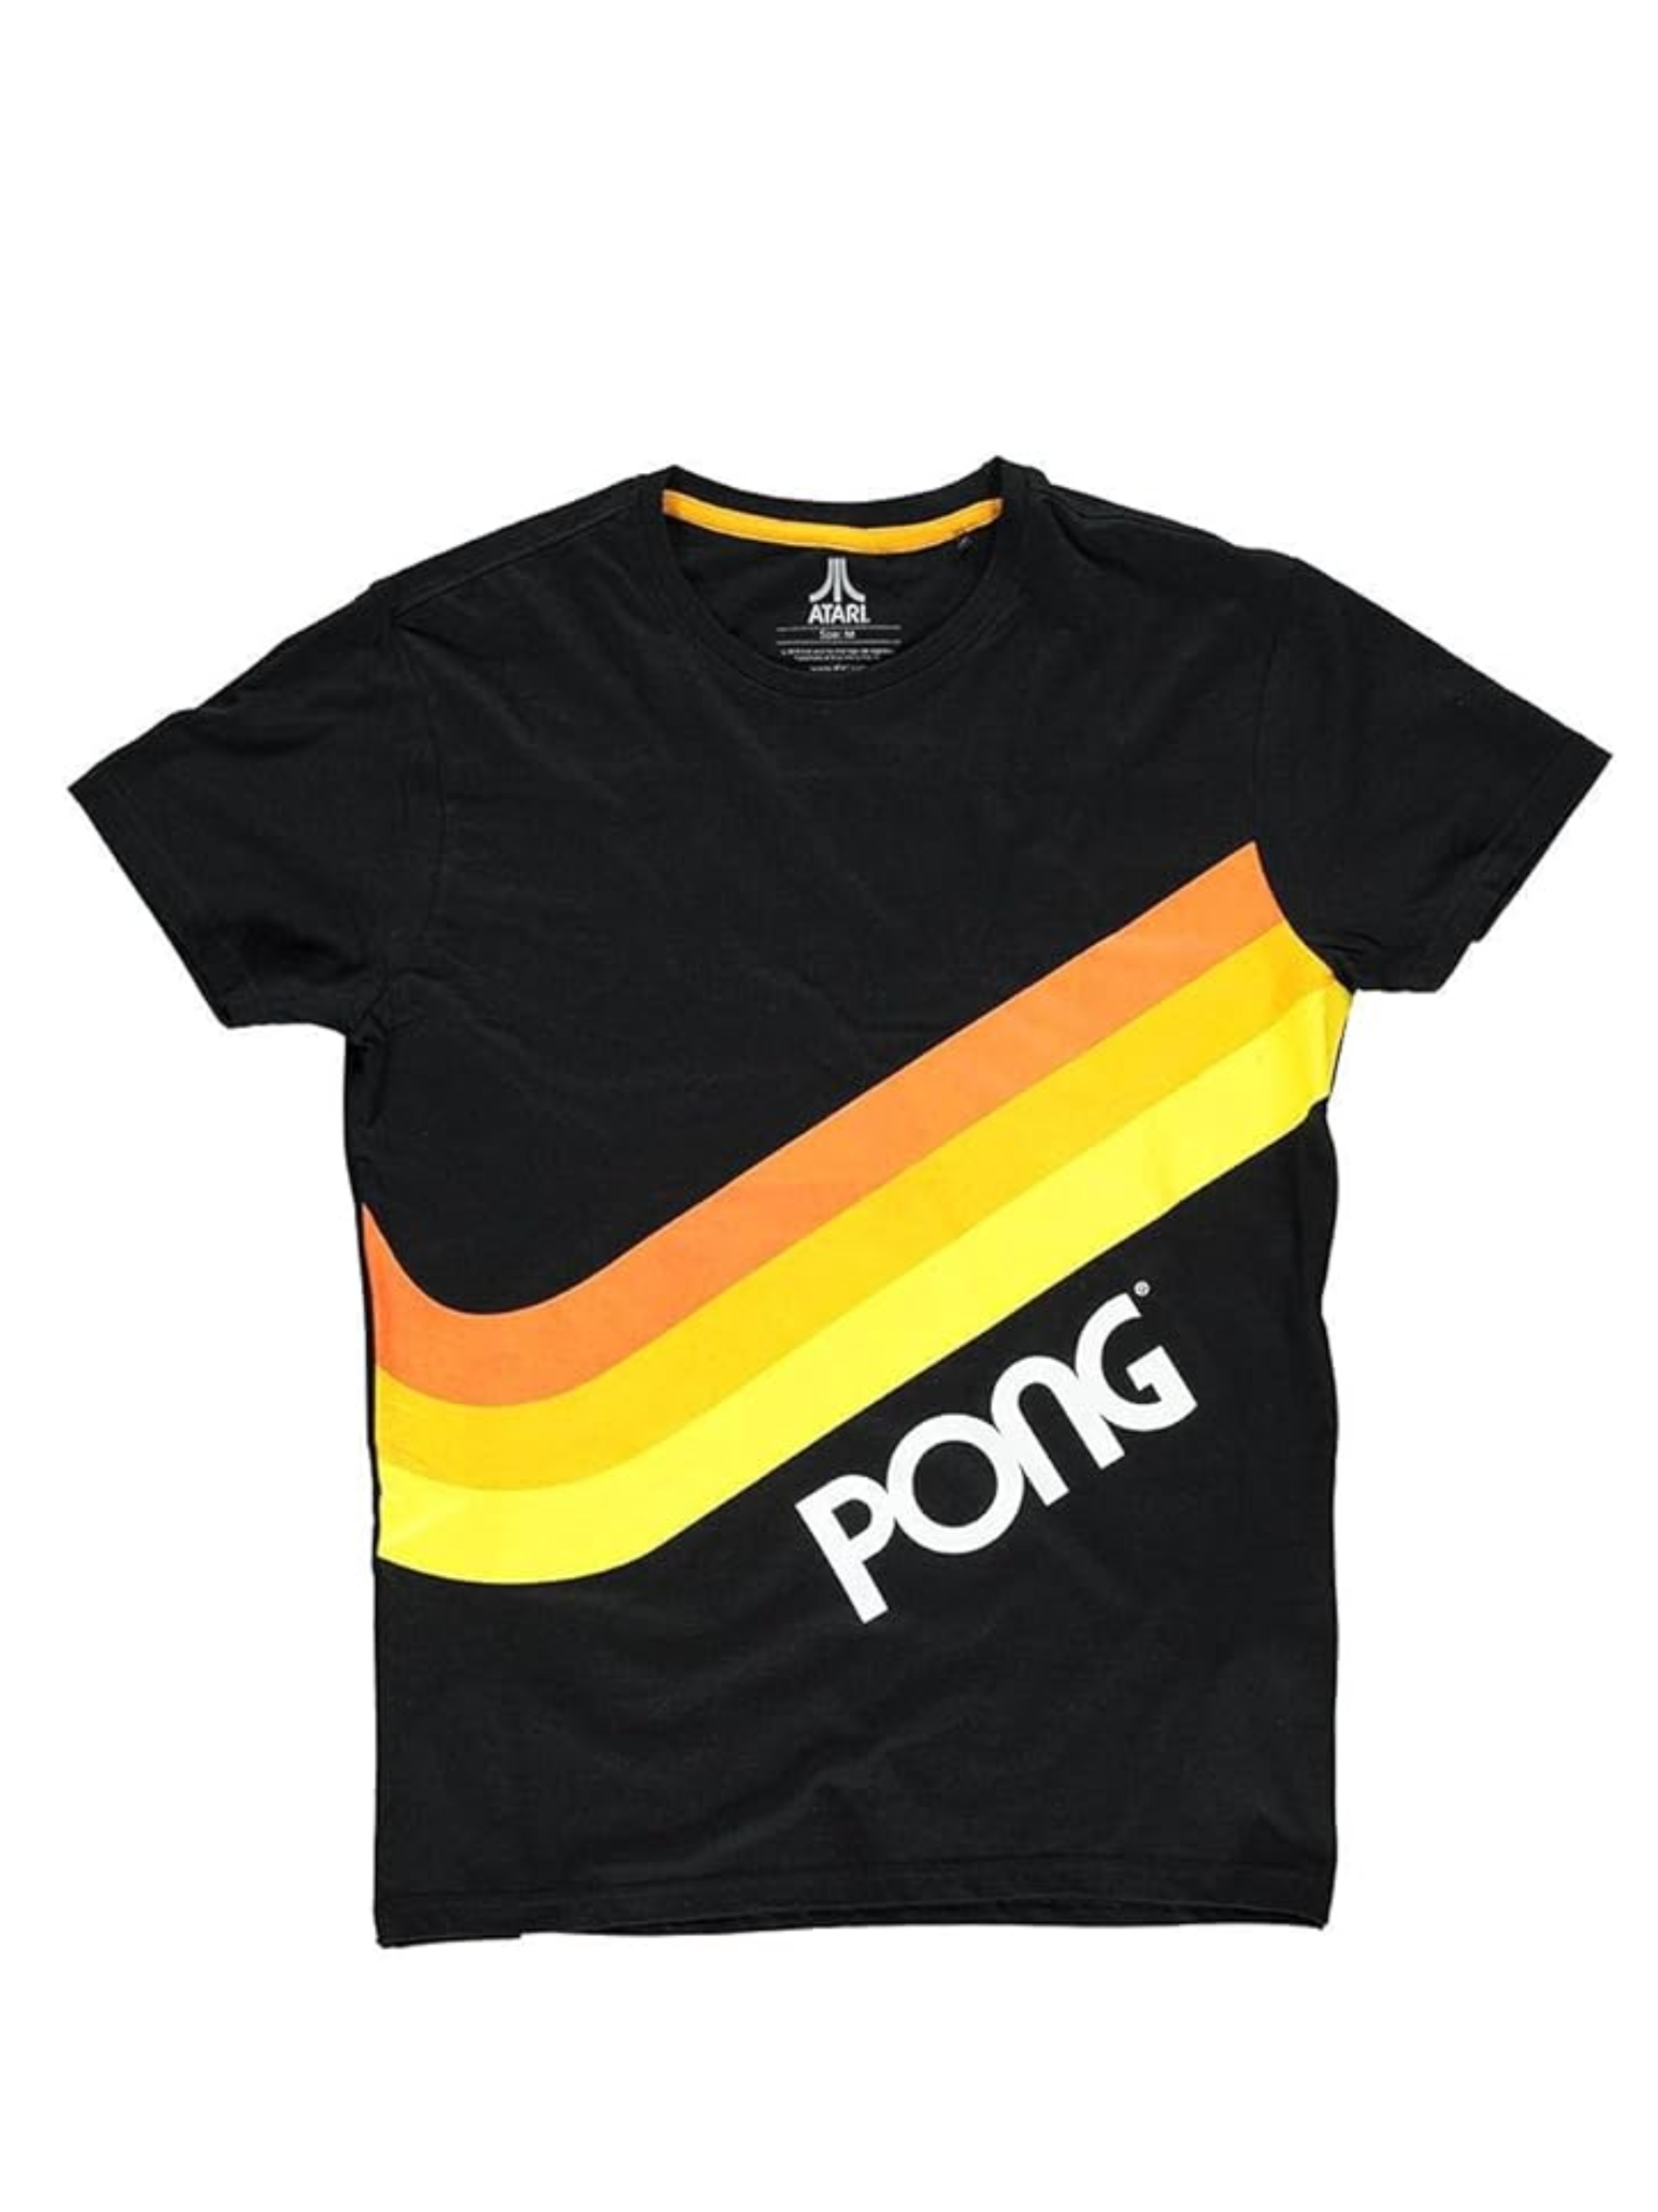 Atari Pong Wave Stripe T-Shirt